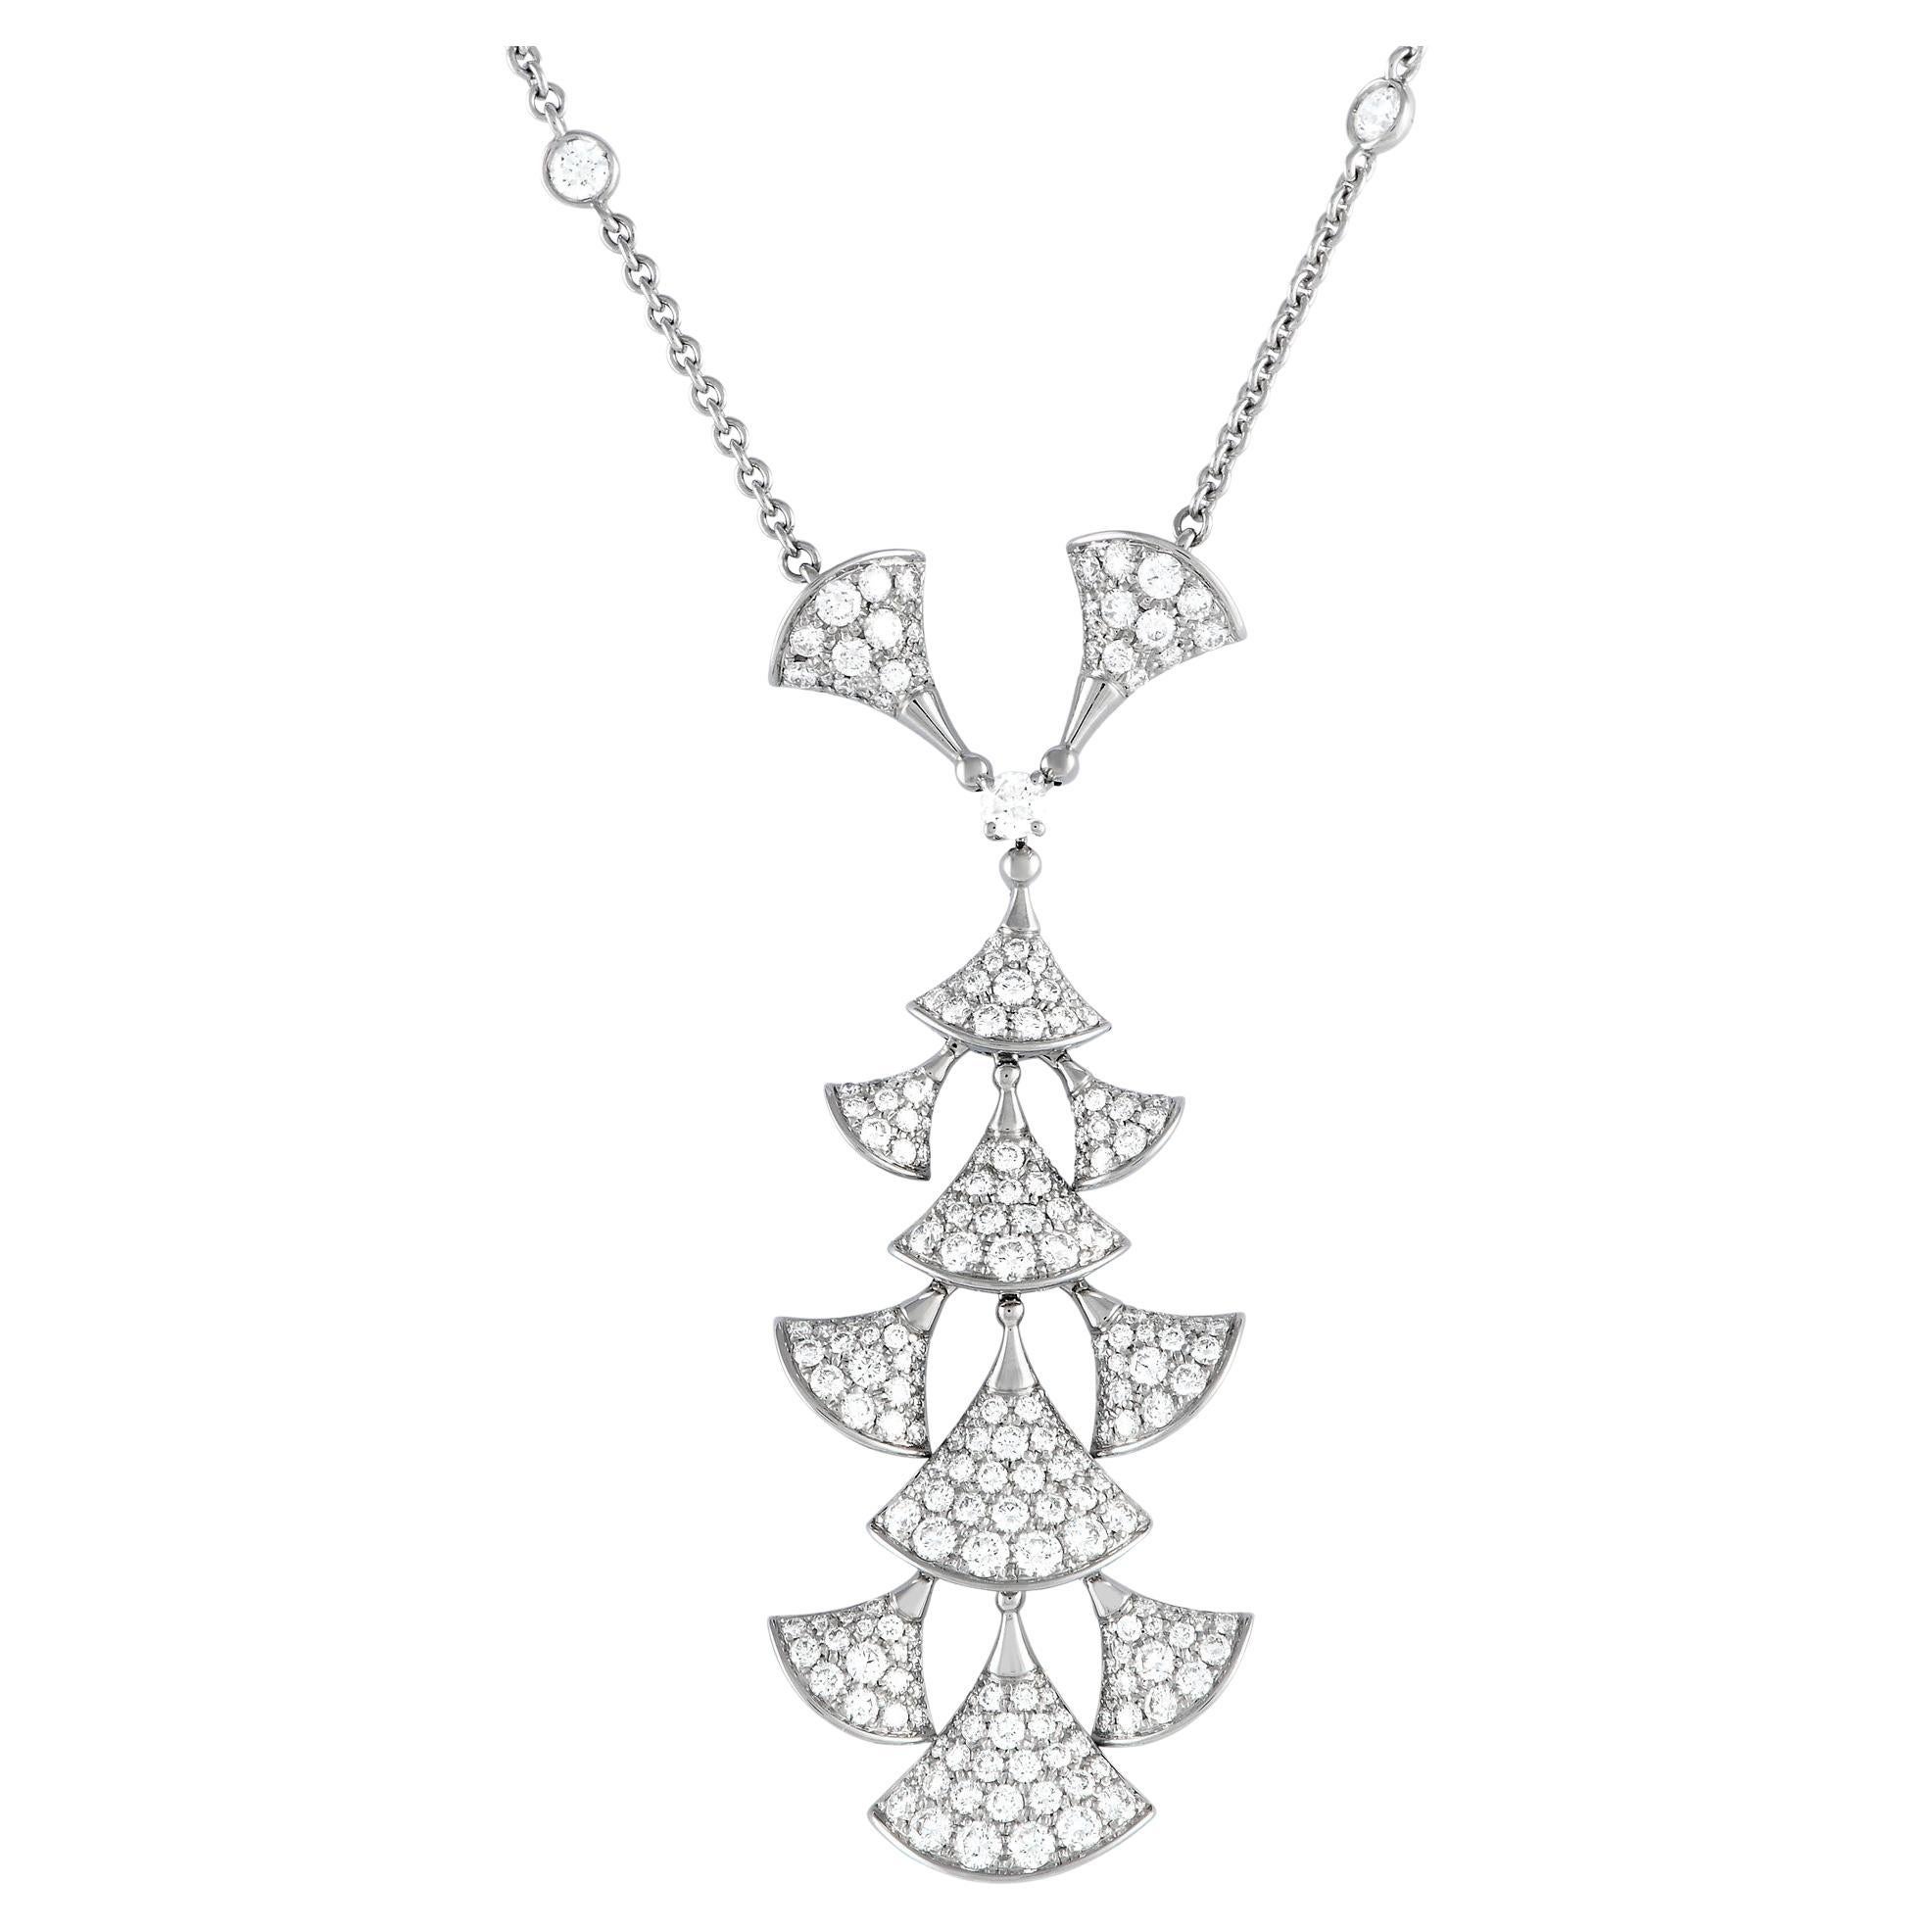 Bvlgari Diva's Dream 18K White Gold 3.75ct Diamond Necklace